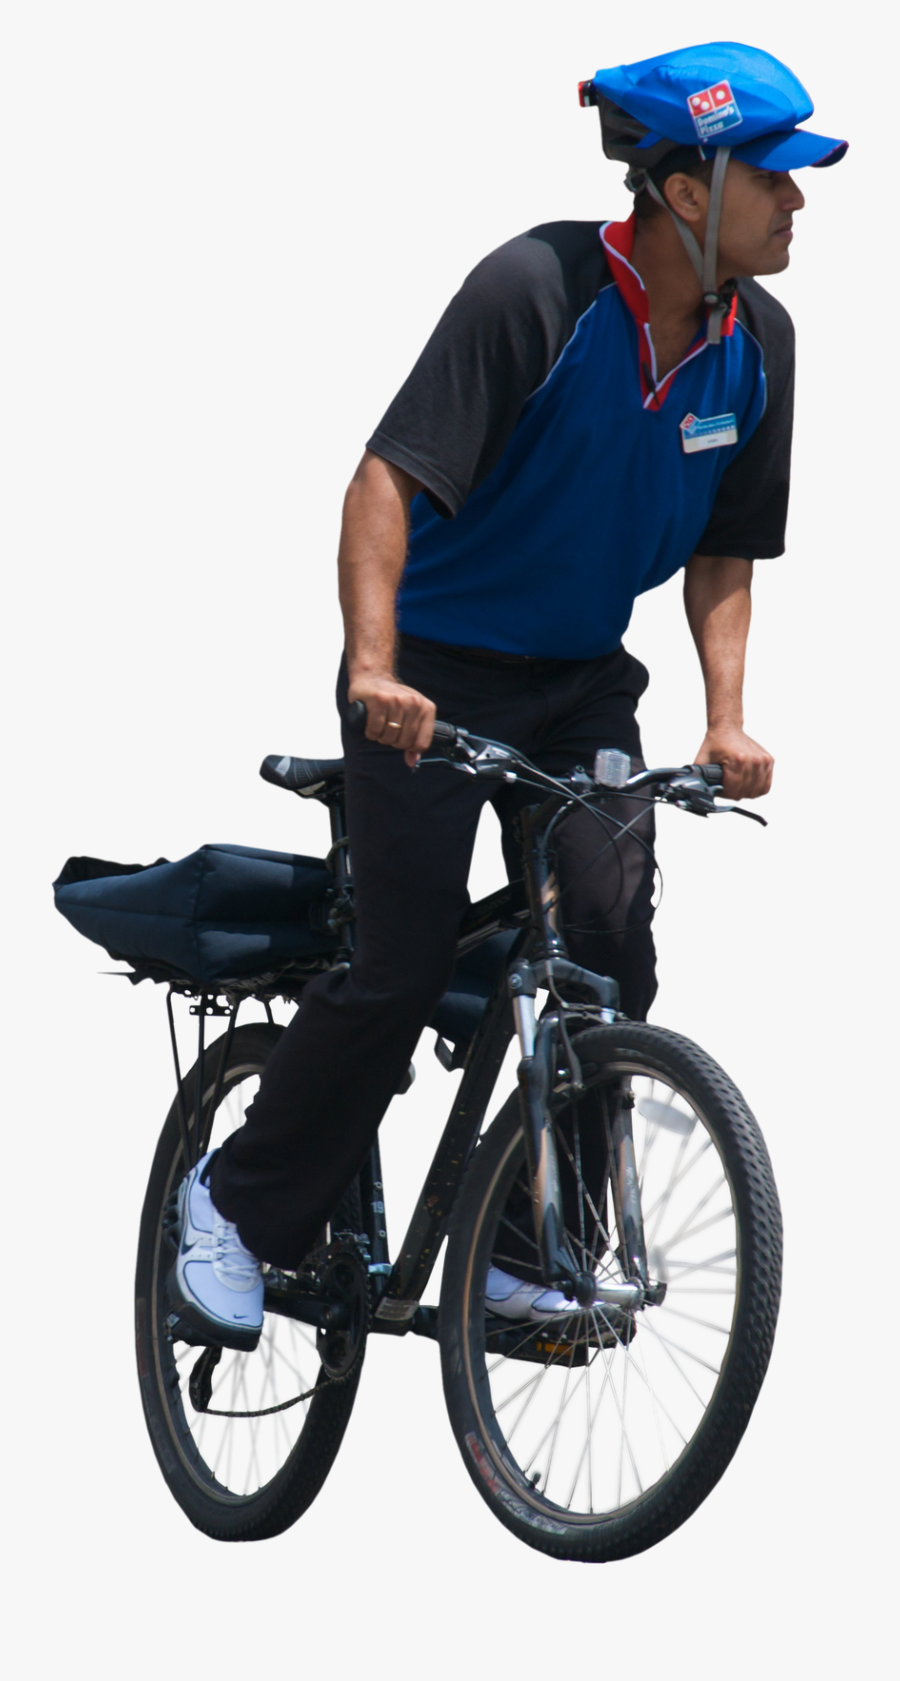 Man Riding Bicycle Png, Transparent Clipart